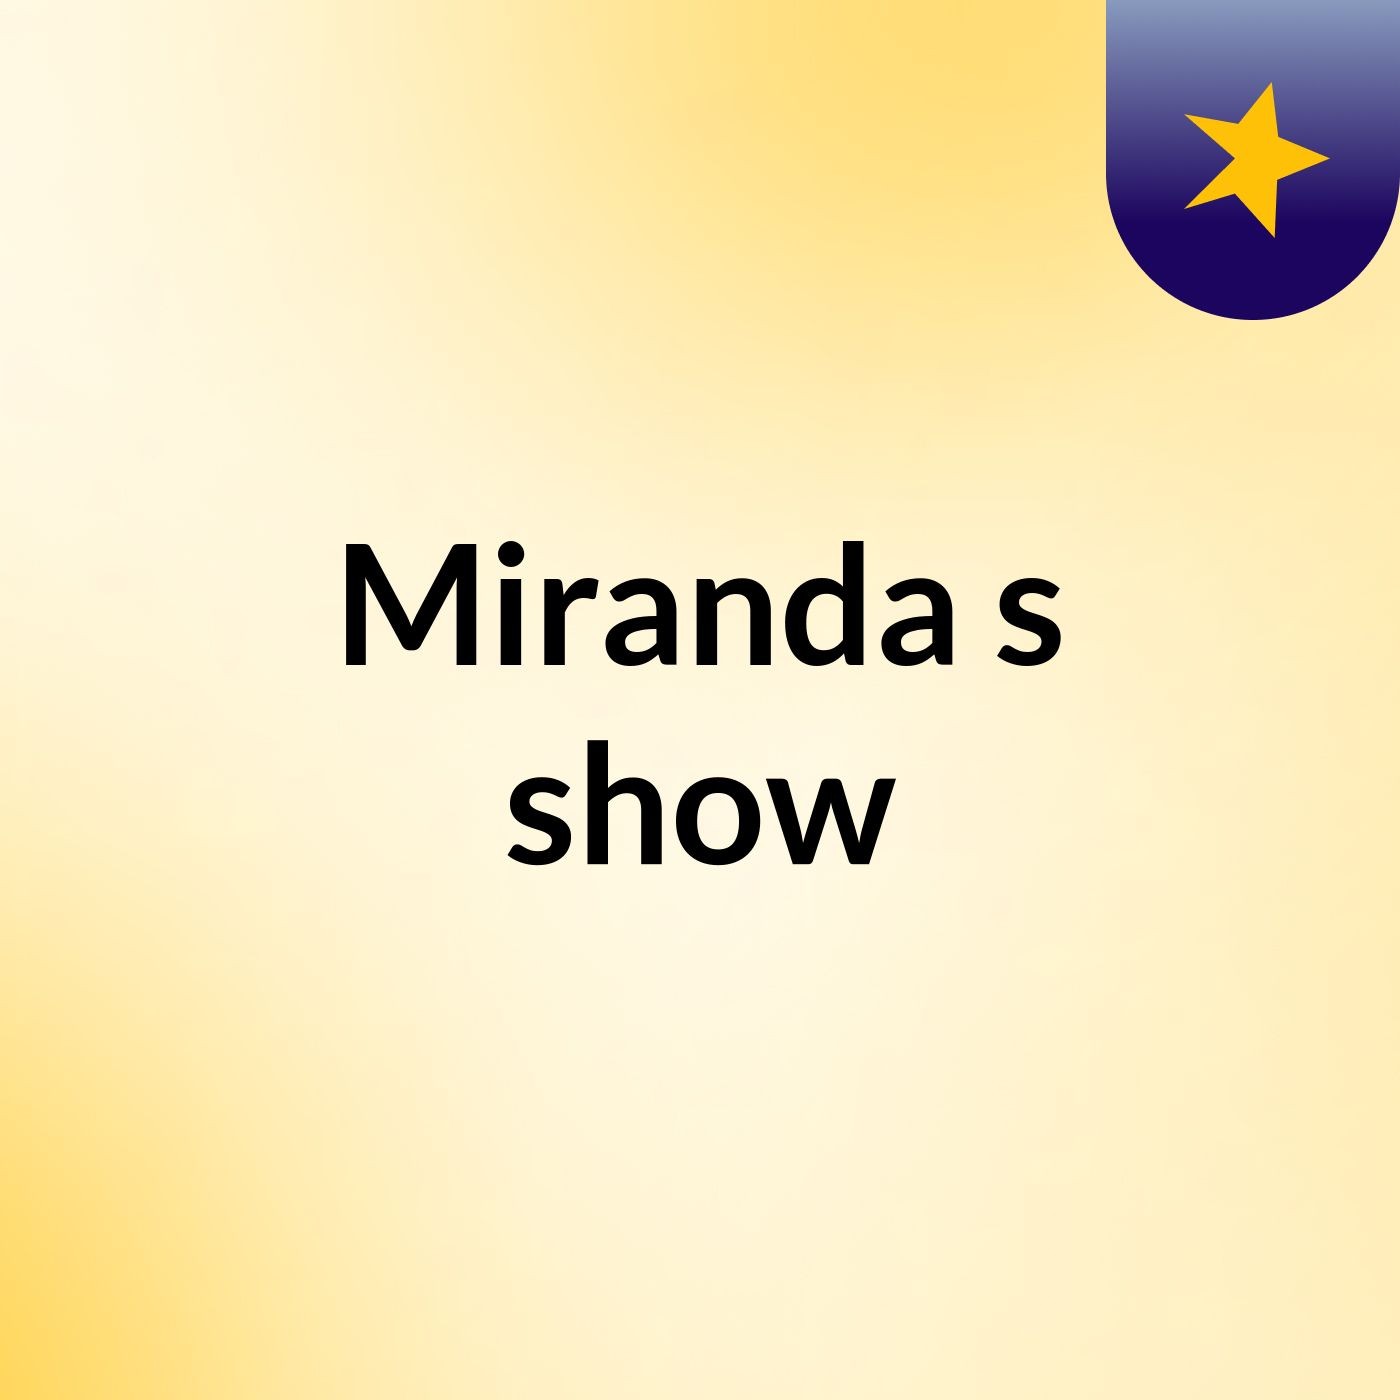 Miranda's show